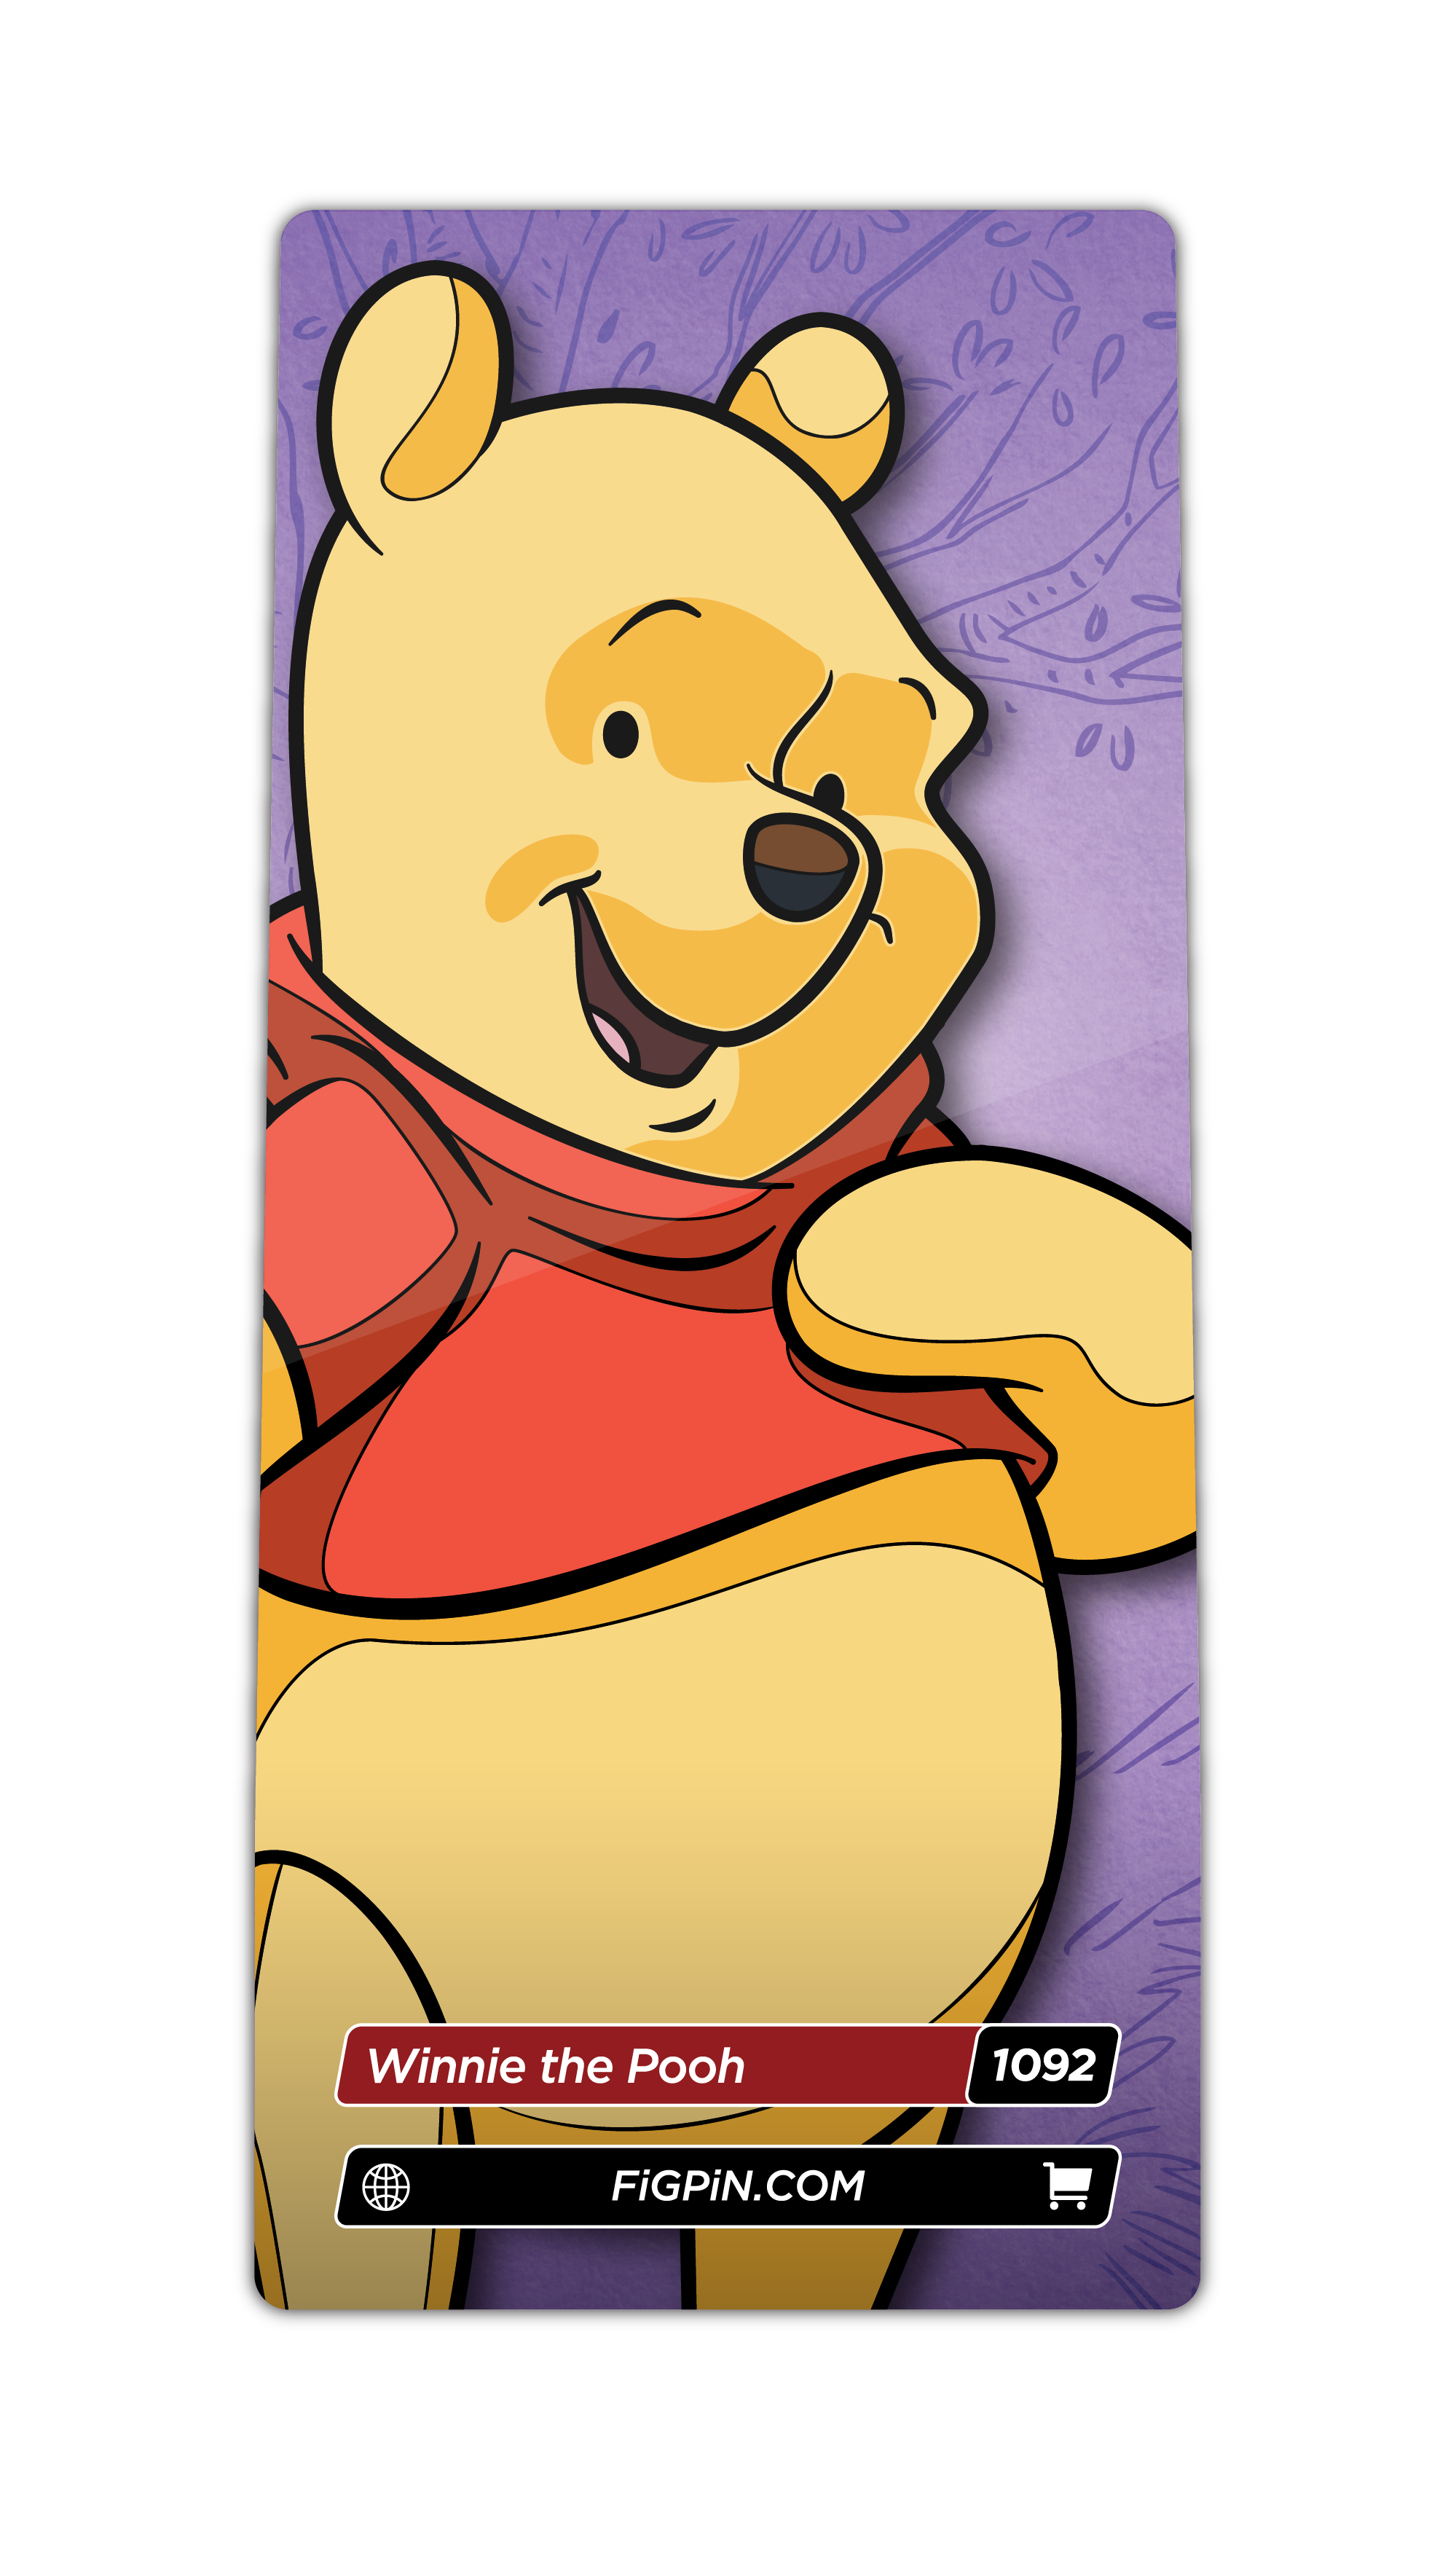 Winnie the Pooh (1092)